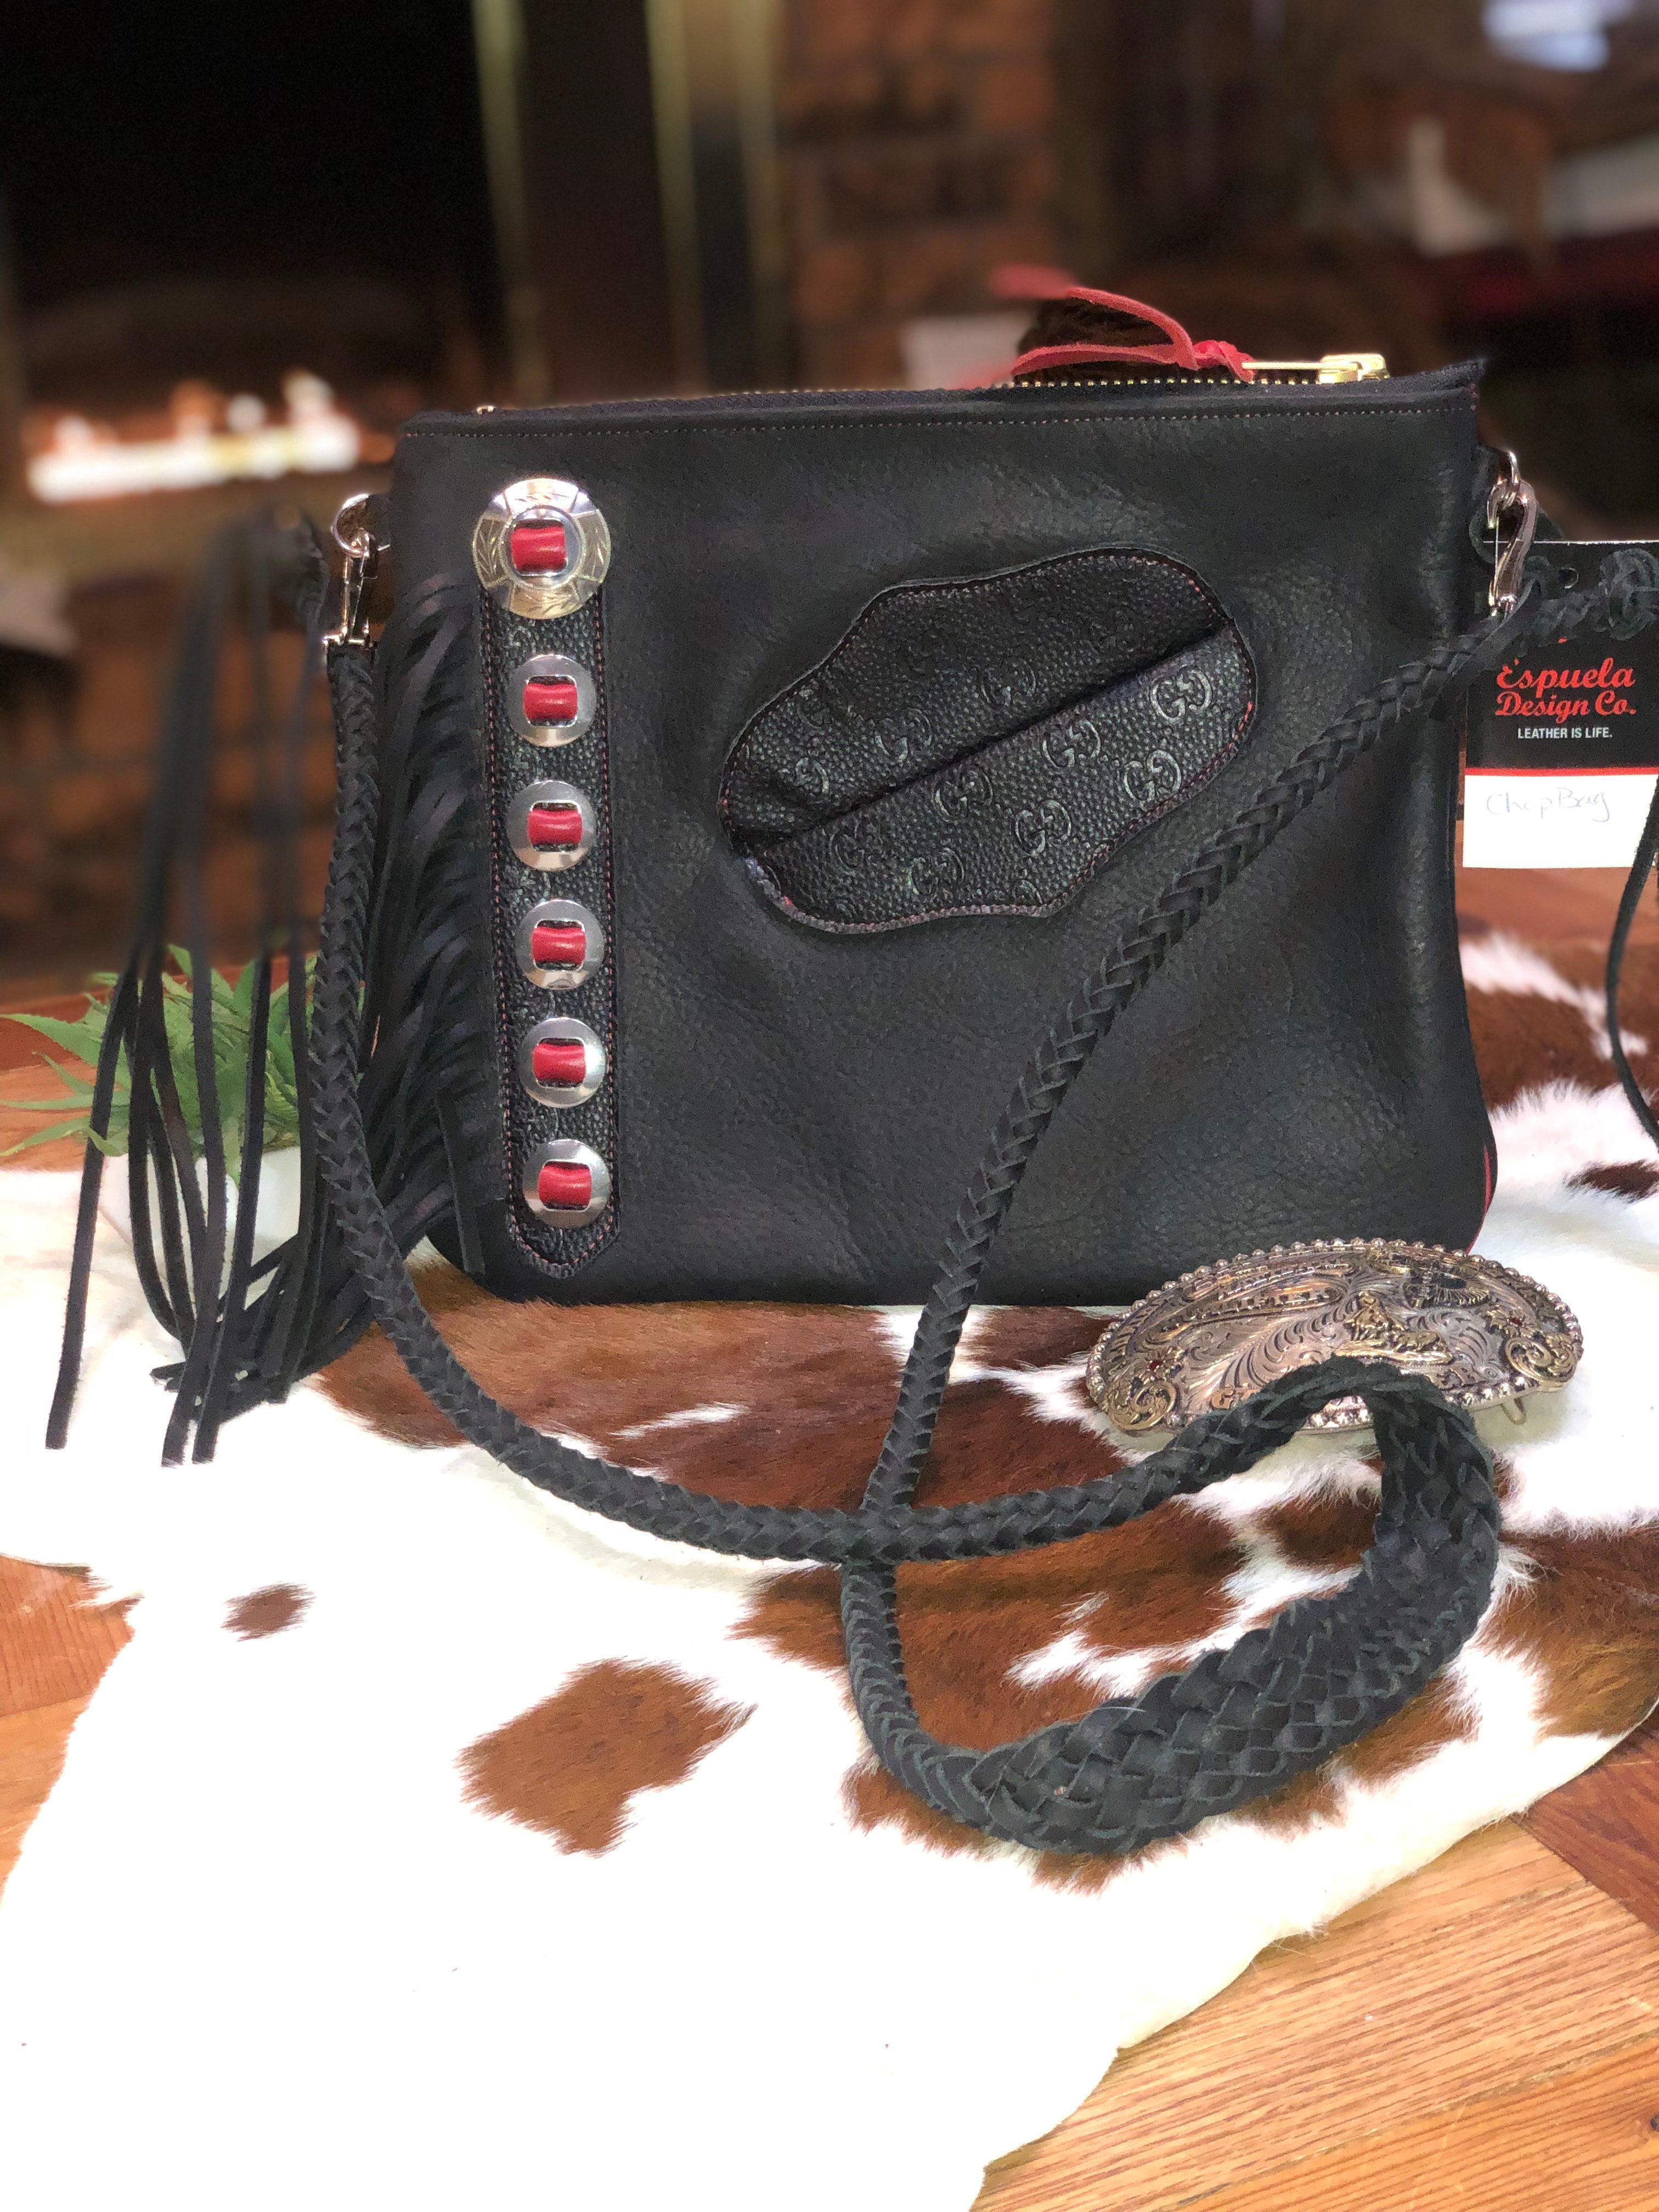 Gucci Leather Chap Bag